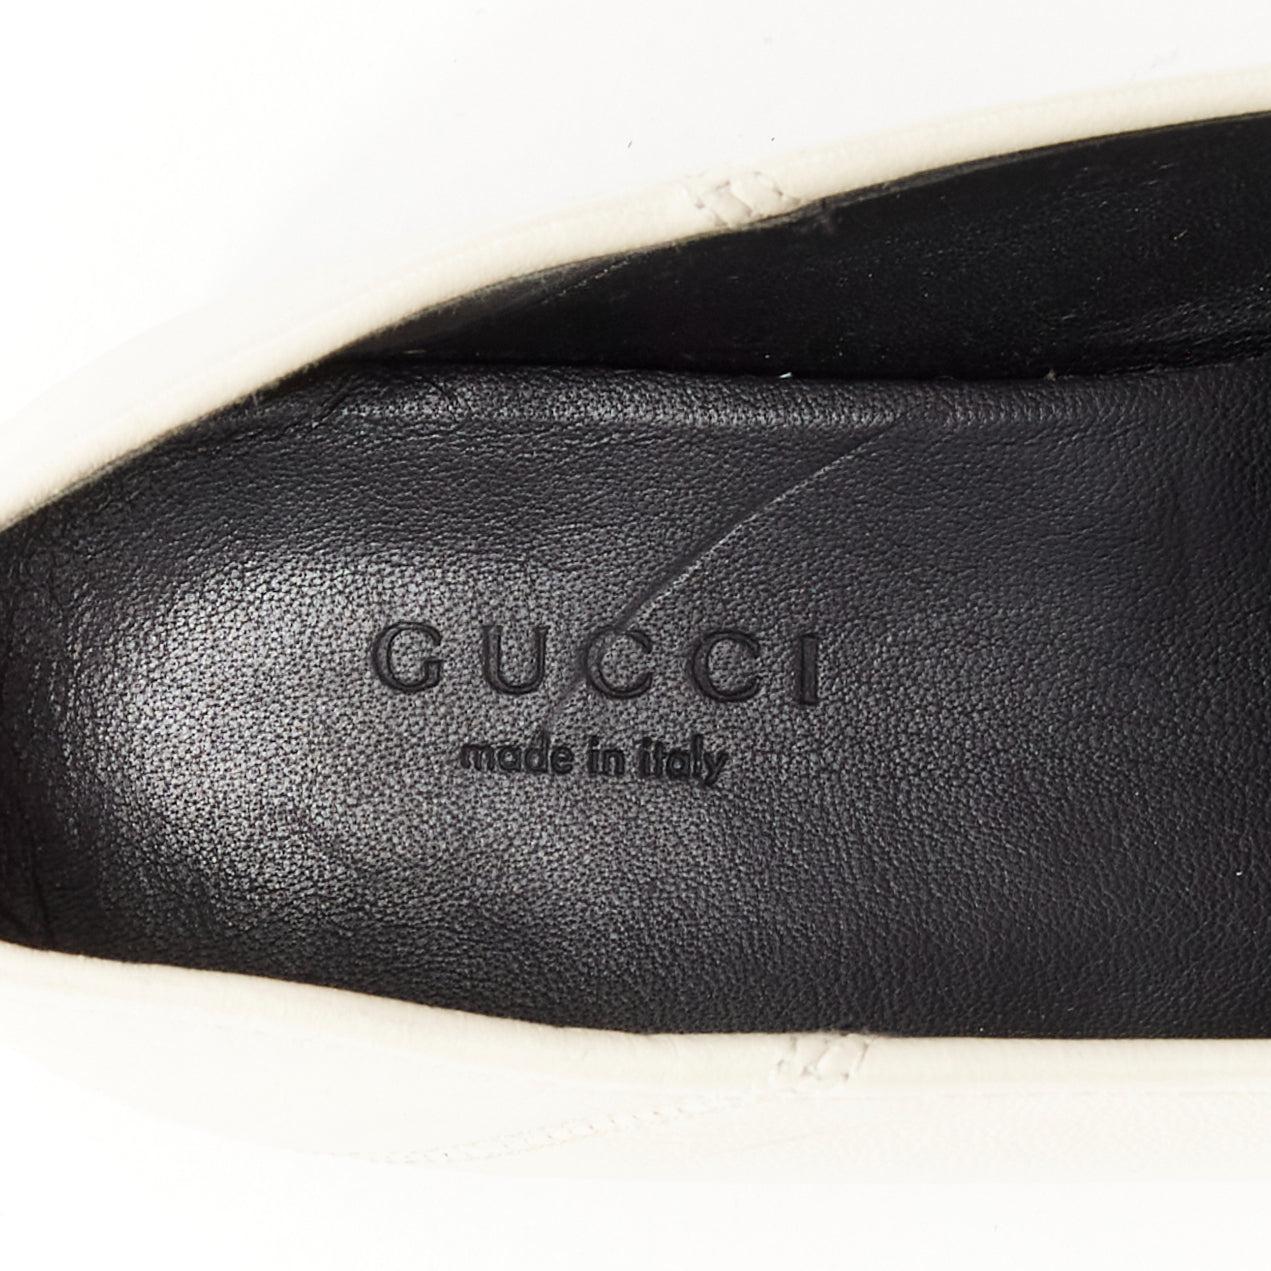 GUCCI Brixton Horsebit cream gold buckles convertible slippers loafers EU35 5